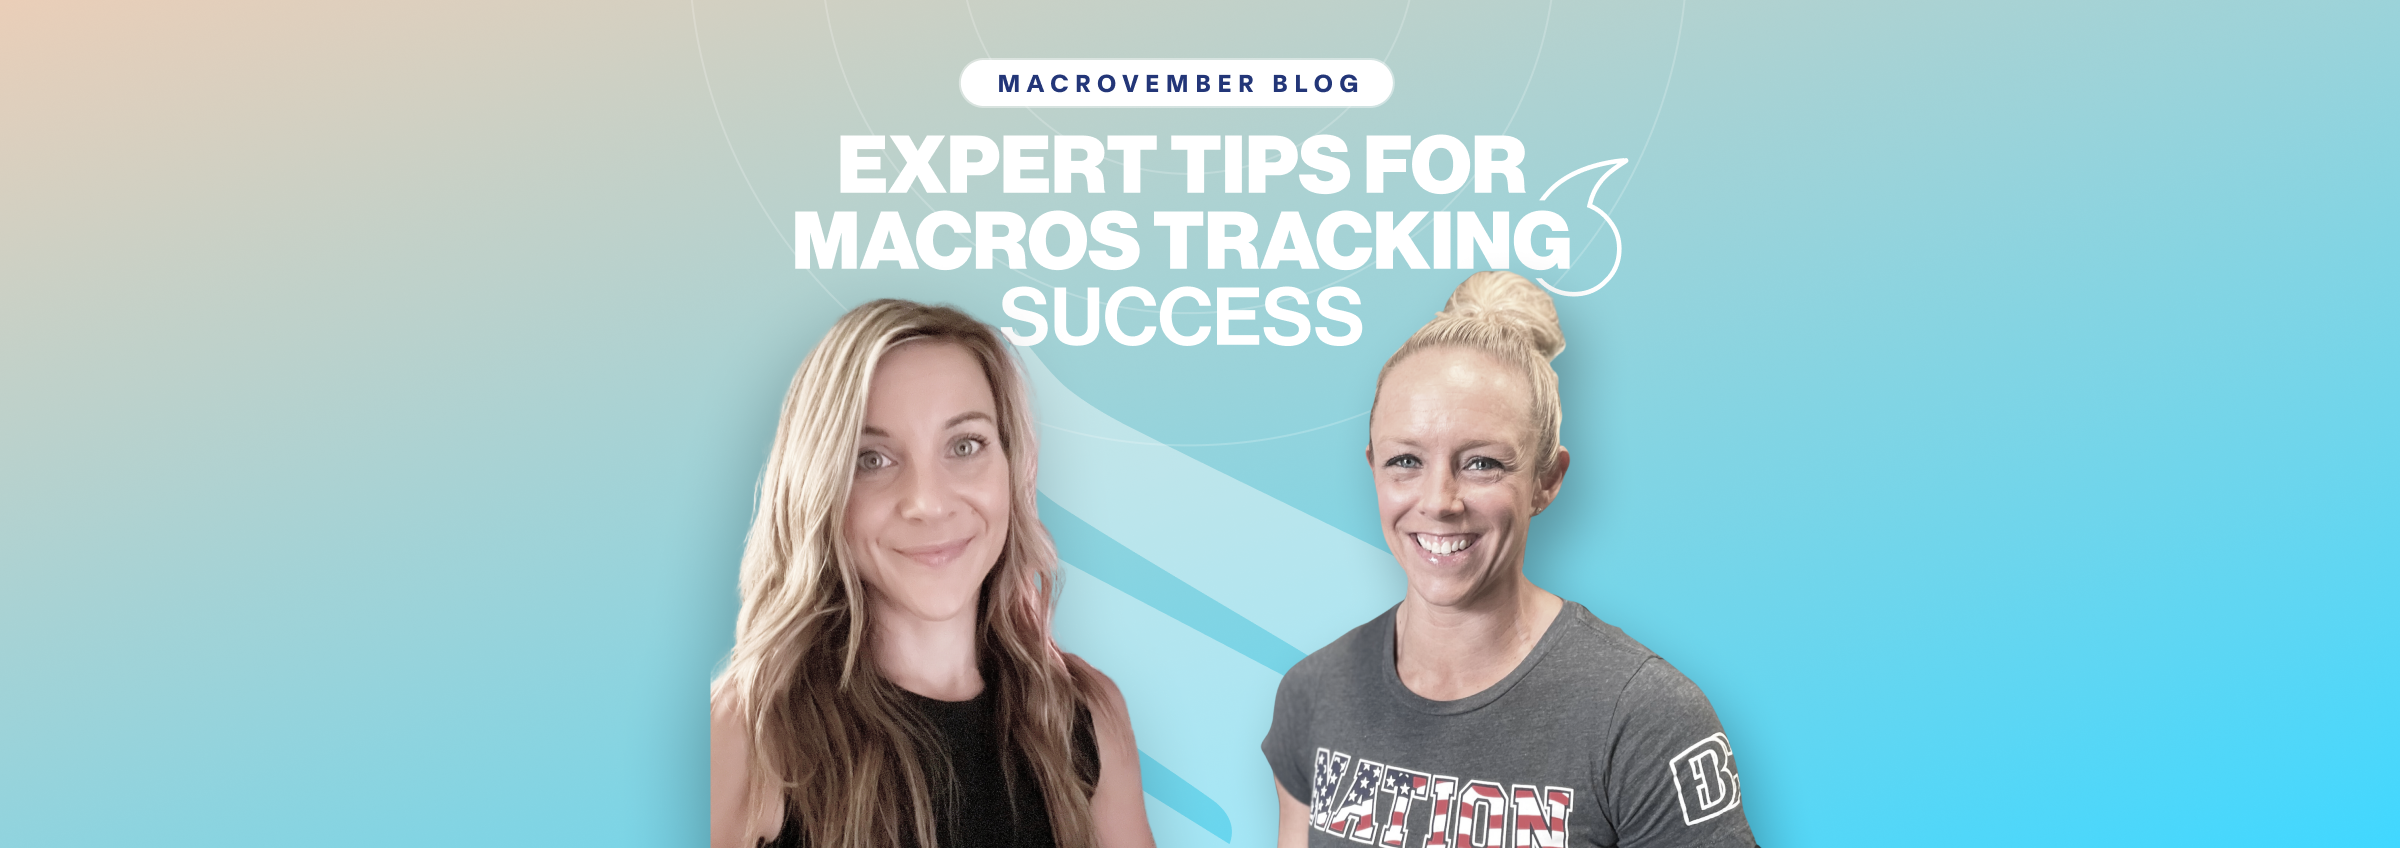 Mastering Macros: Expert Tips for Tracking Success in Macrovember